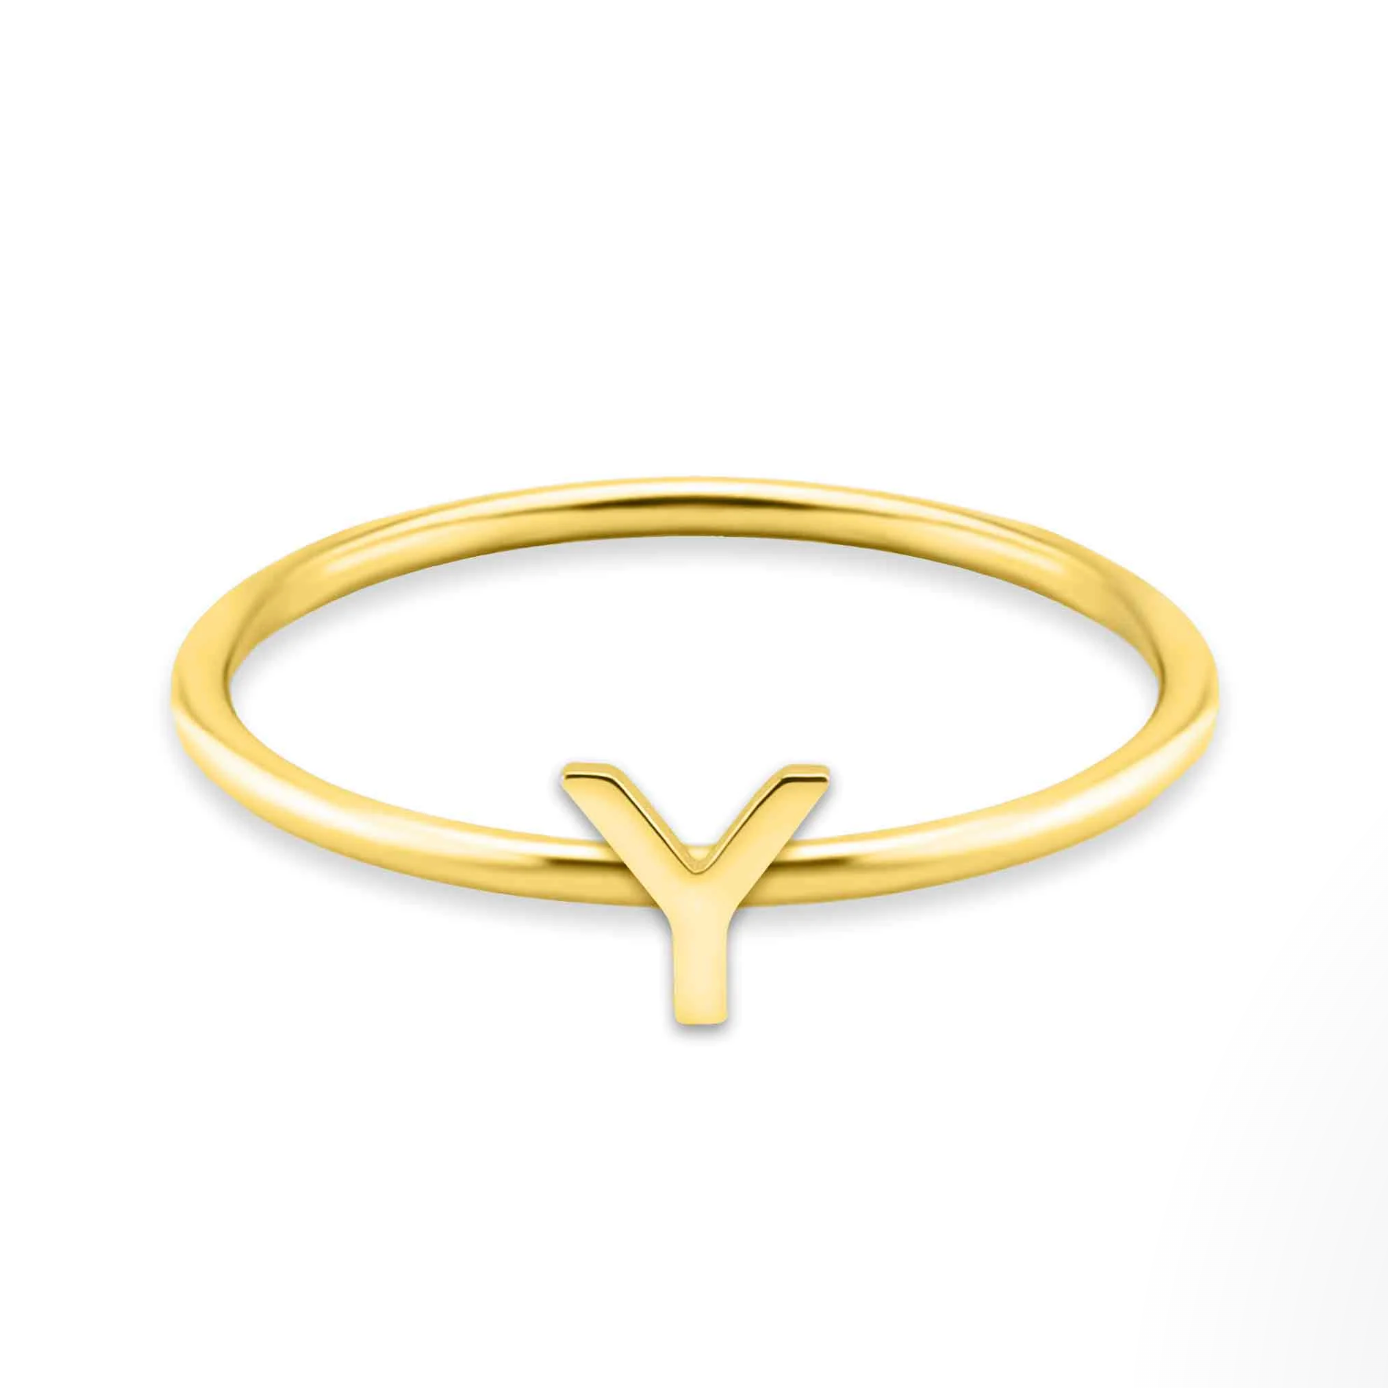 Freeform Swirl Design Diamond Ring 14K Yellow Gold